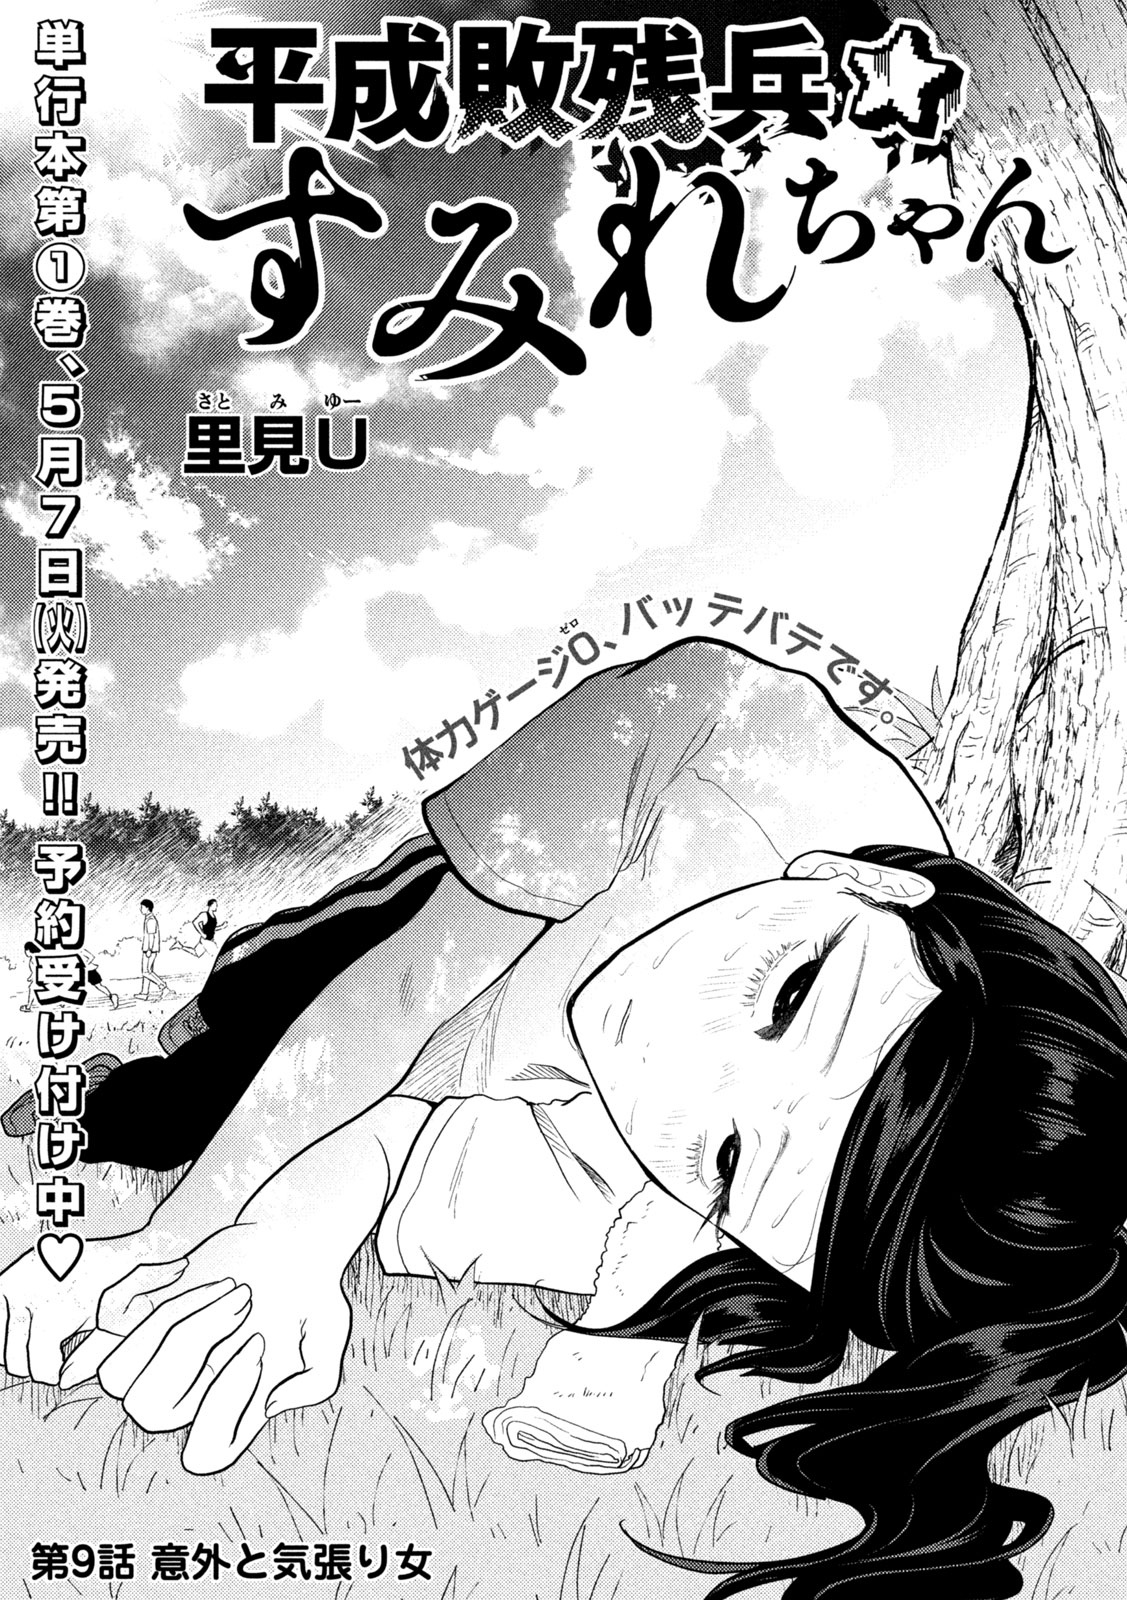 Heisei Haizanhei Sumire-chan - Chapter 9 - Page 1